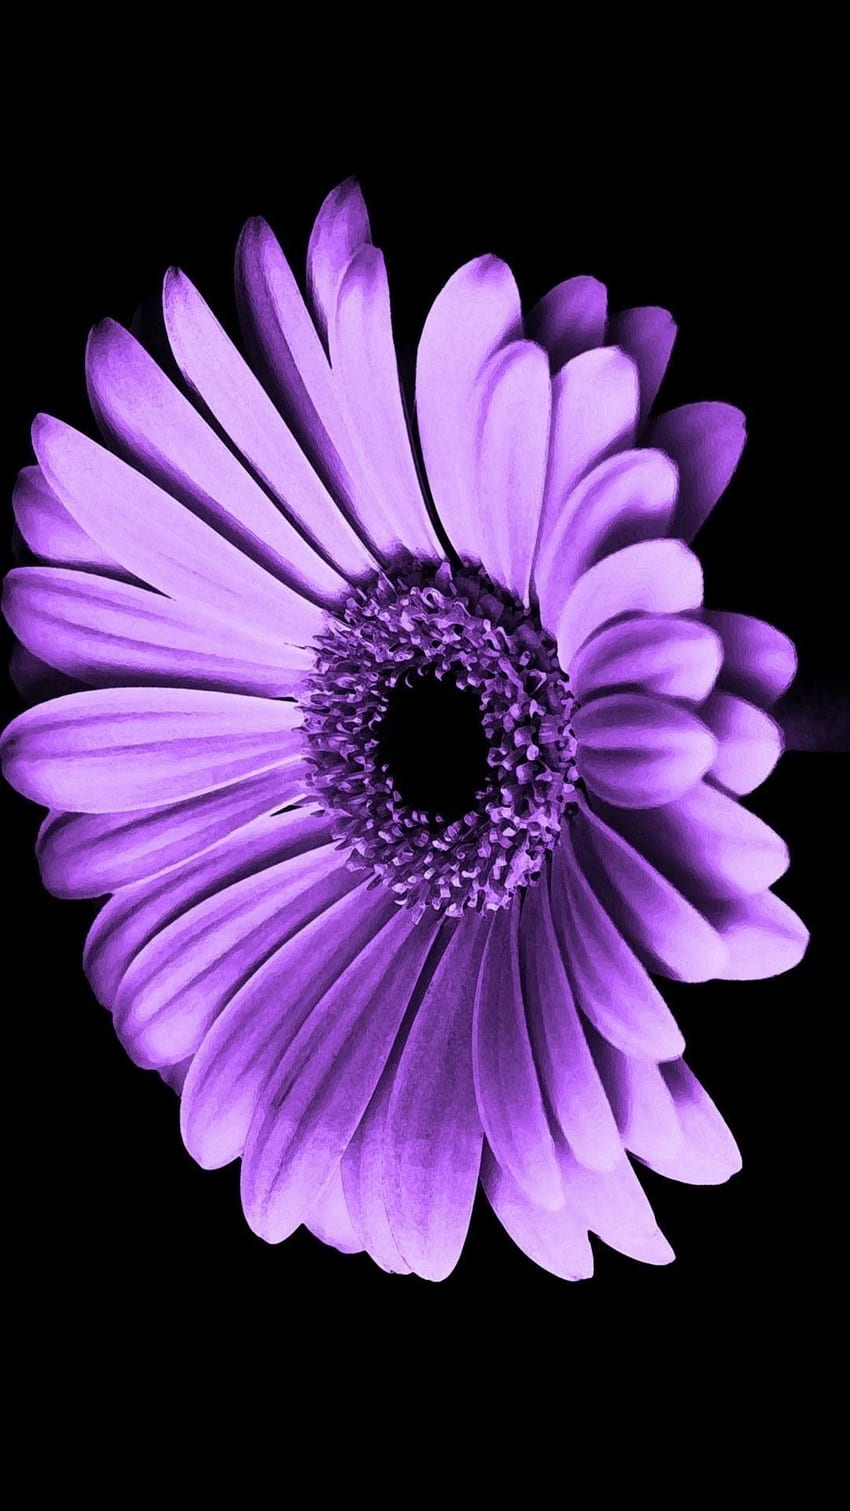 683888 Purple Flower Wallpaper Images Stock Photos  Vectors   Shutterstock